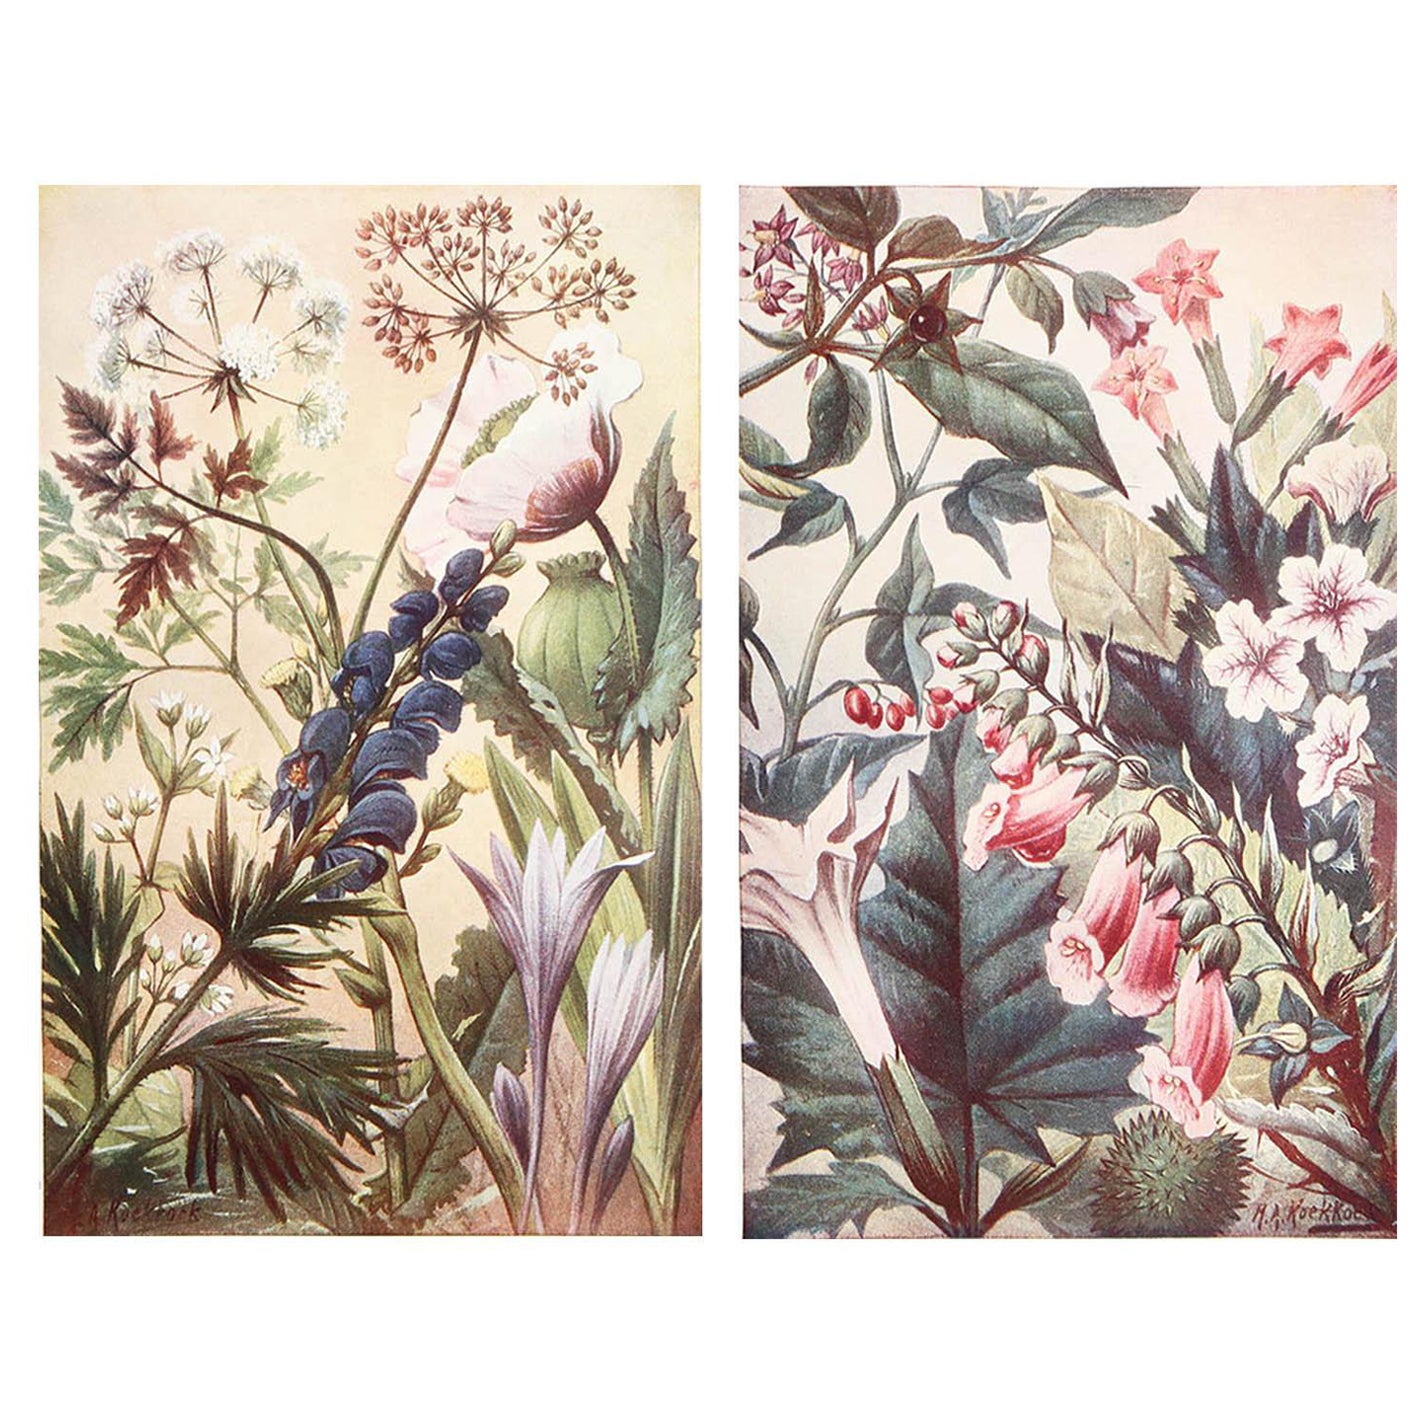 Pair of Original Vintage Botanical Prints, circa 1900